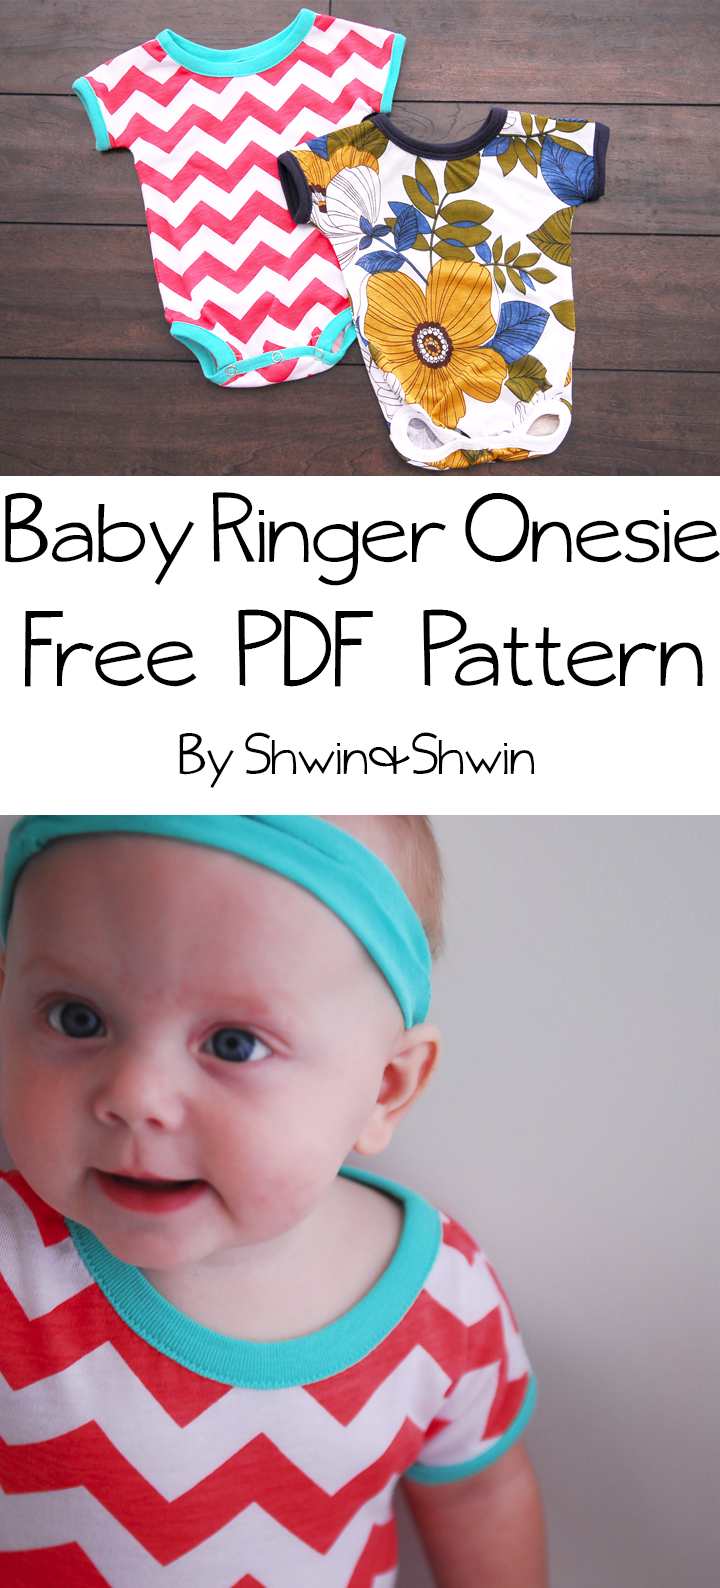 SeeMeSew: Top 5 Free baby patterns